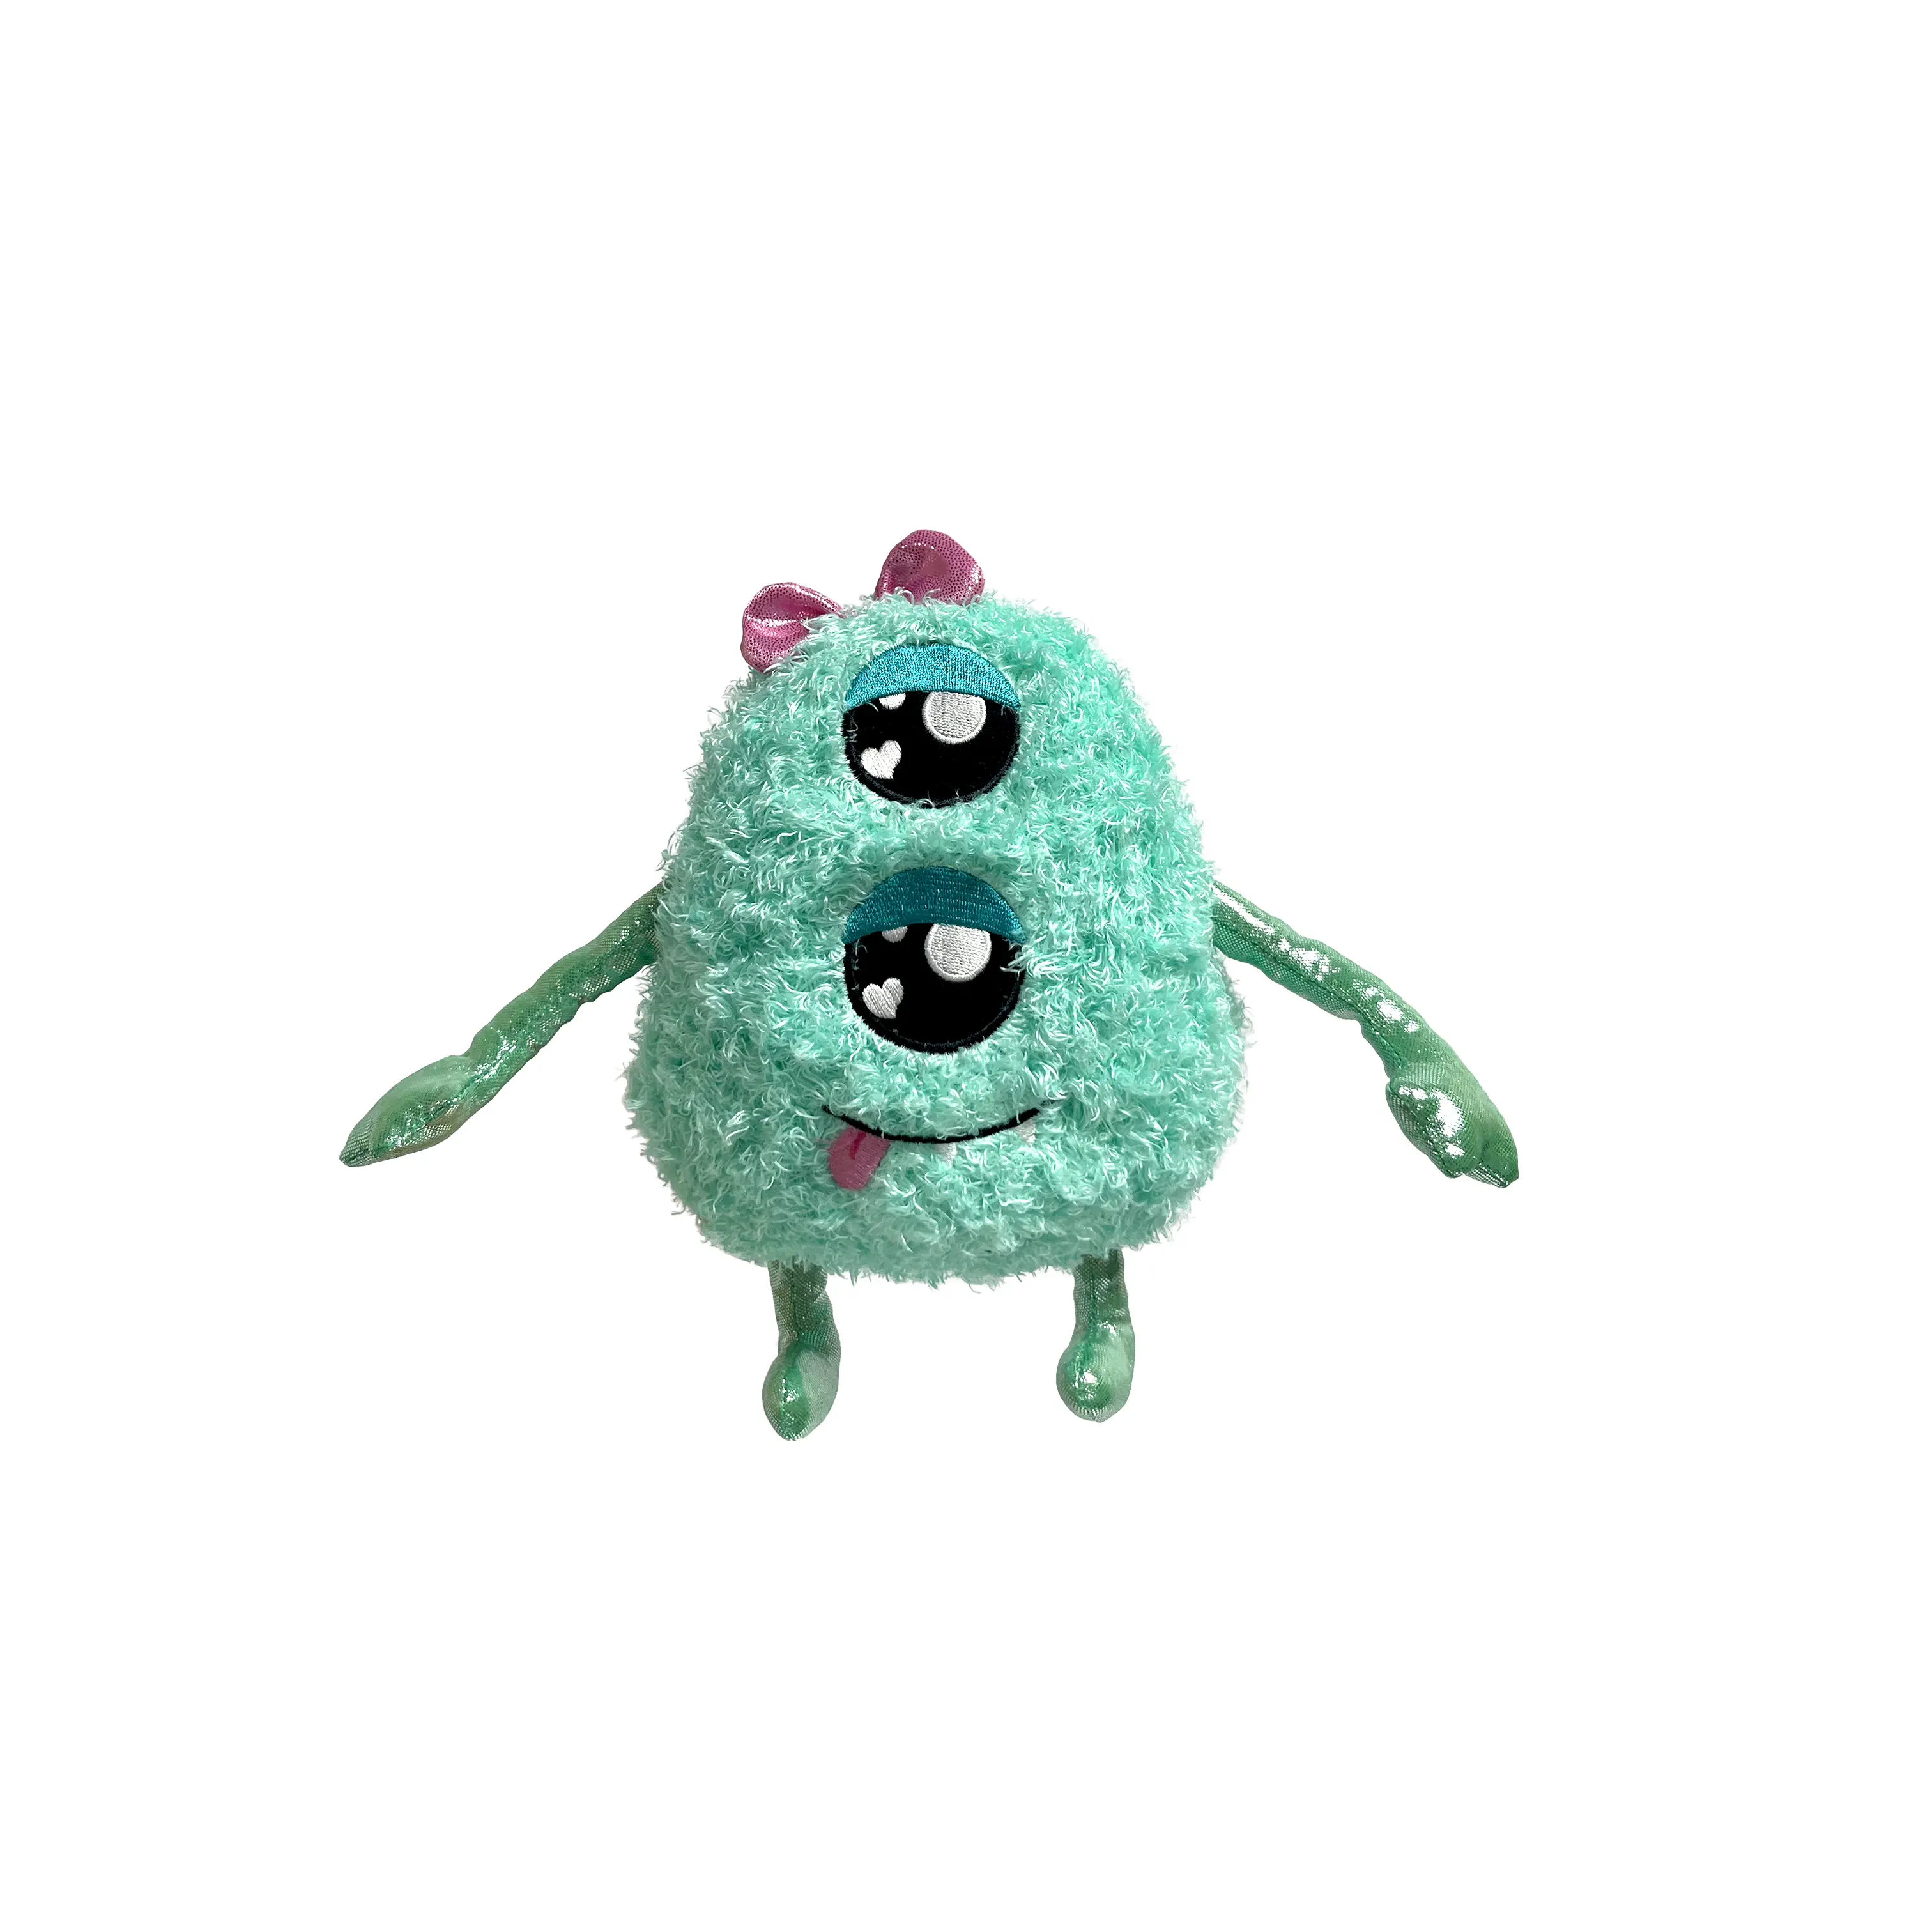 Cute Monster Stuffed Animal Plush Super Soft Plush Toy Hugging Plush Pillow Kawaii Great Gift For Kids